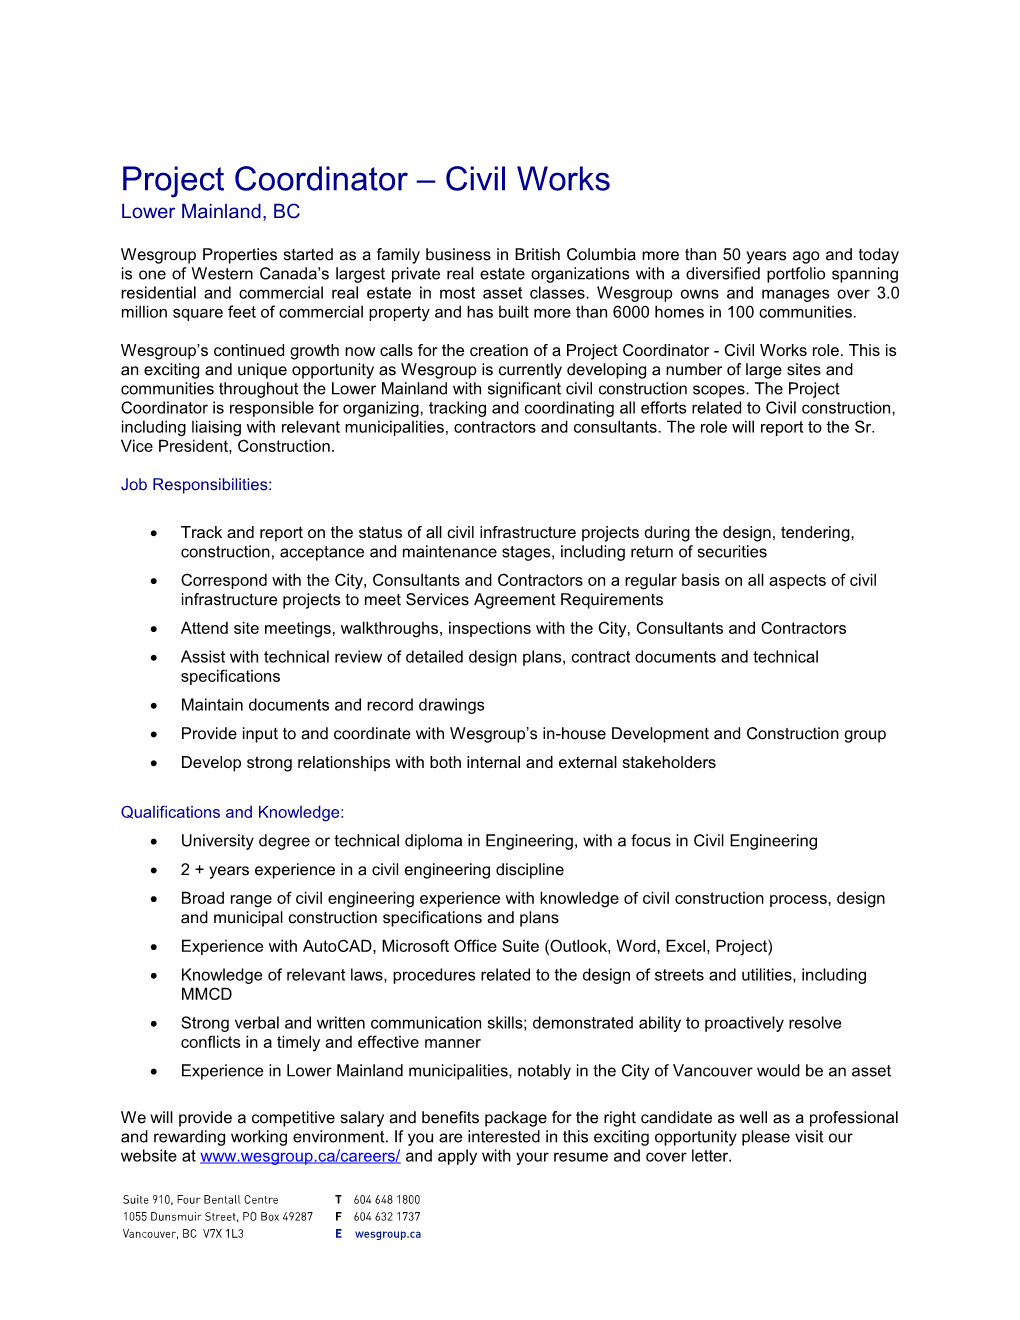 Project Coordinator Civil Works